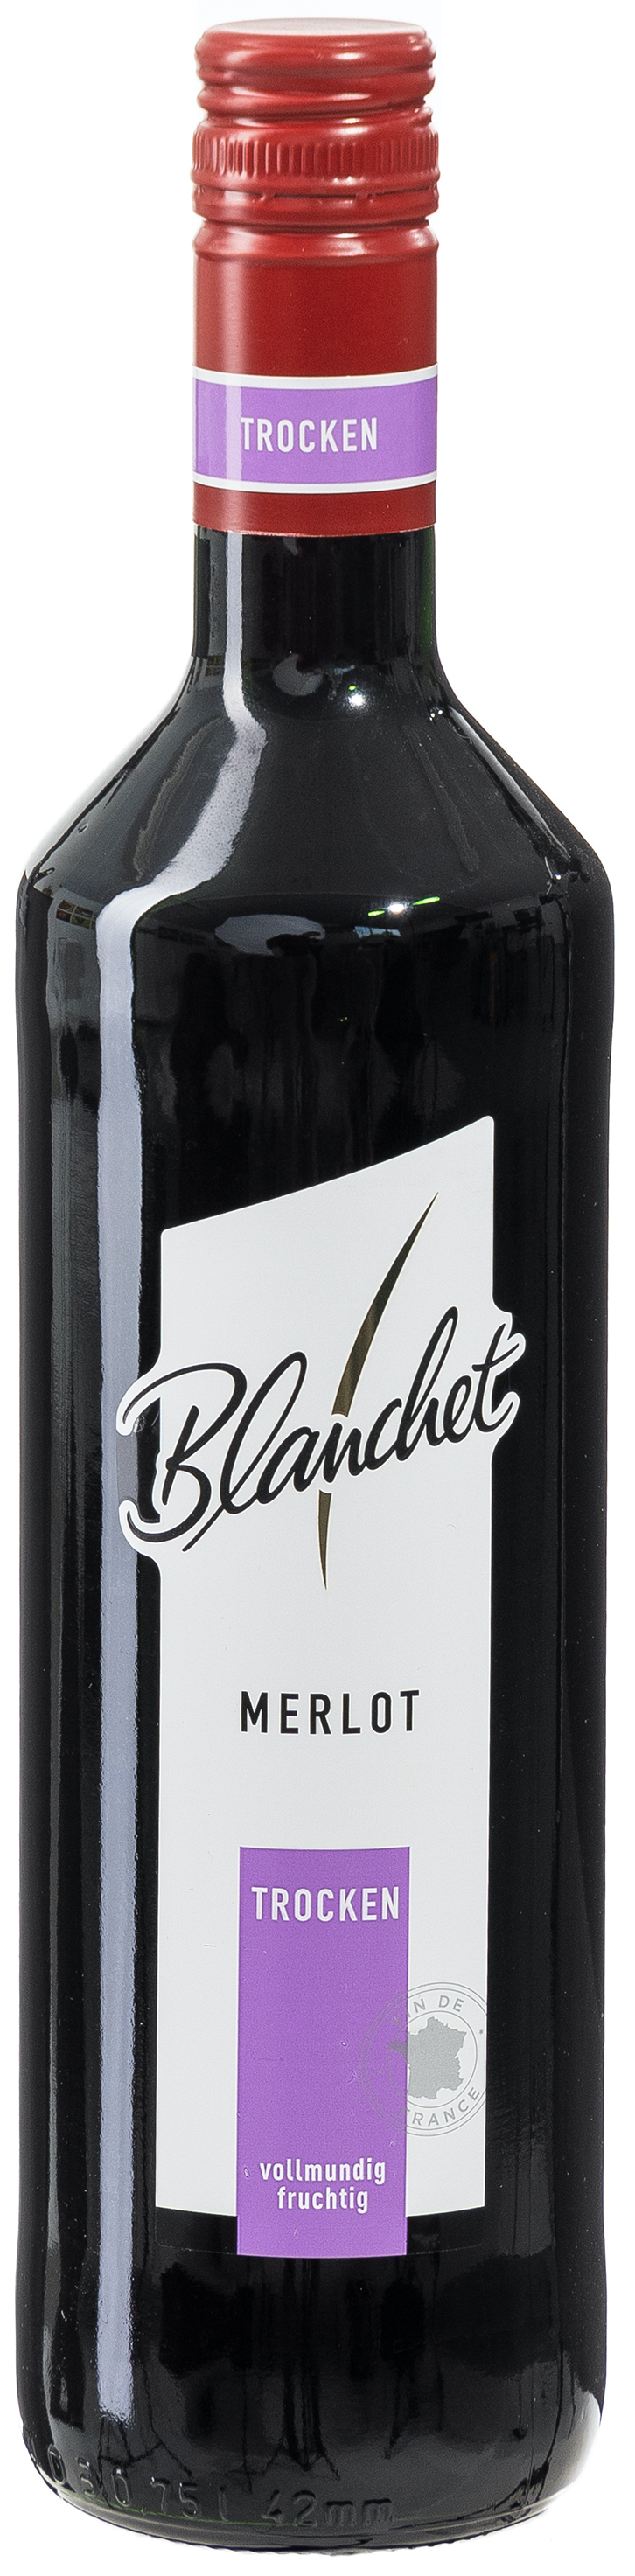 Blanchet Merlot trocken 12,5% vol. 0,75L